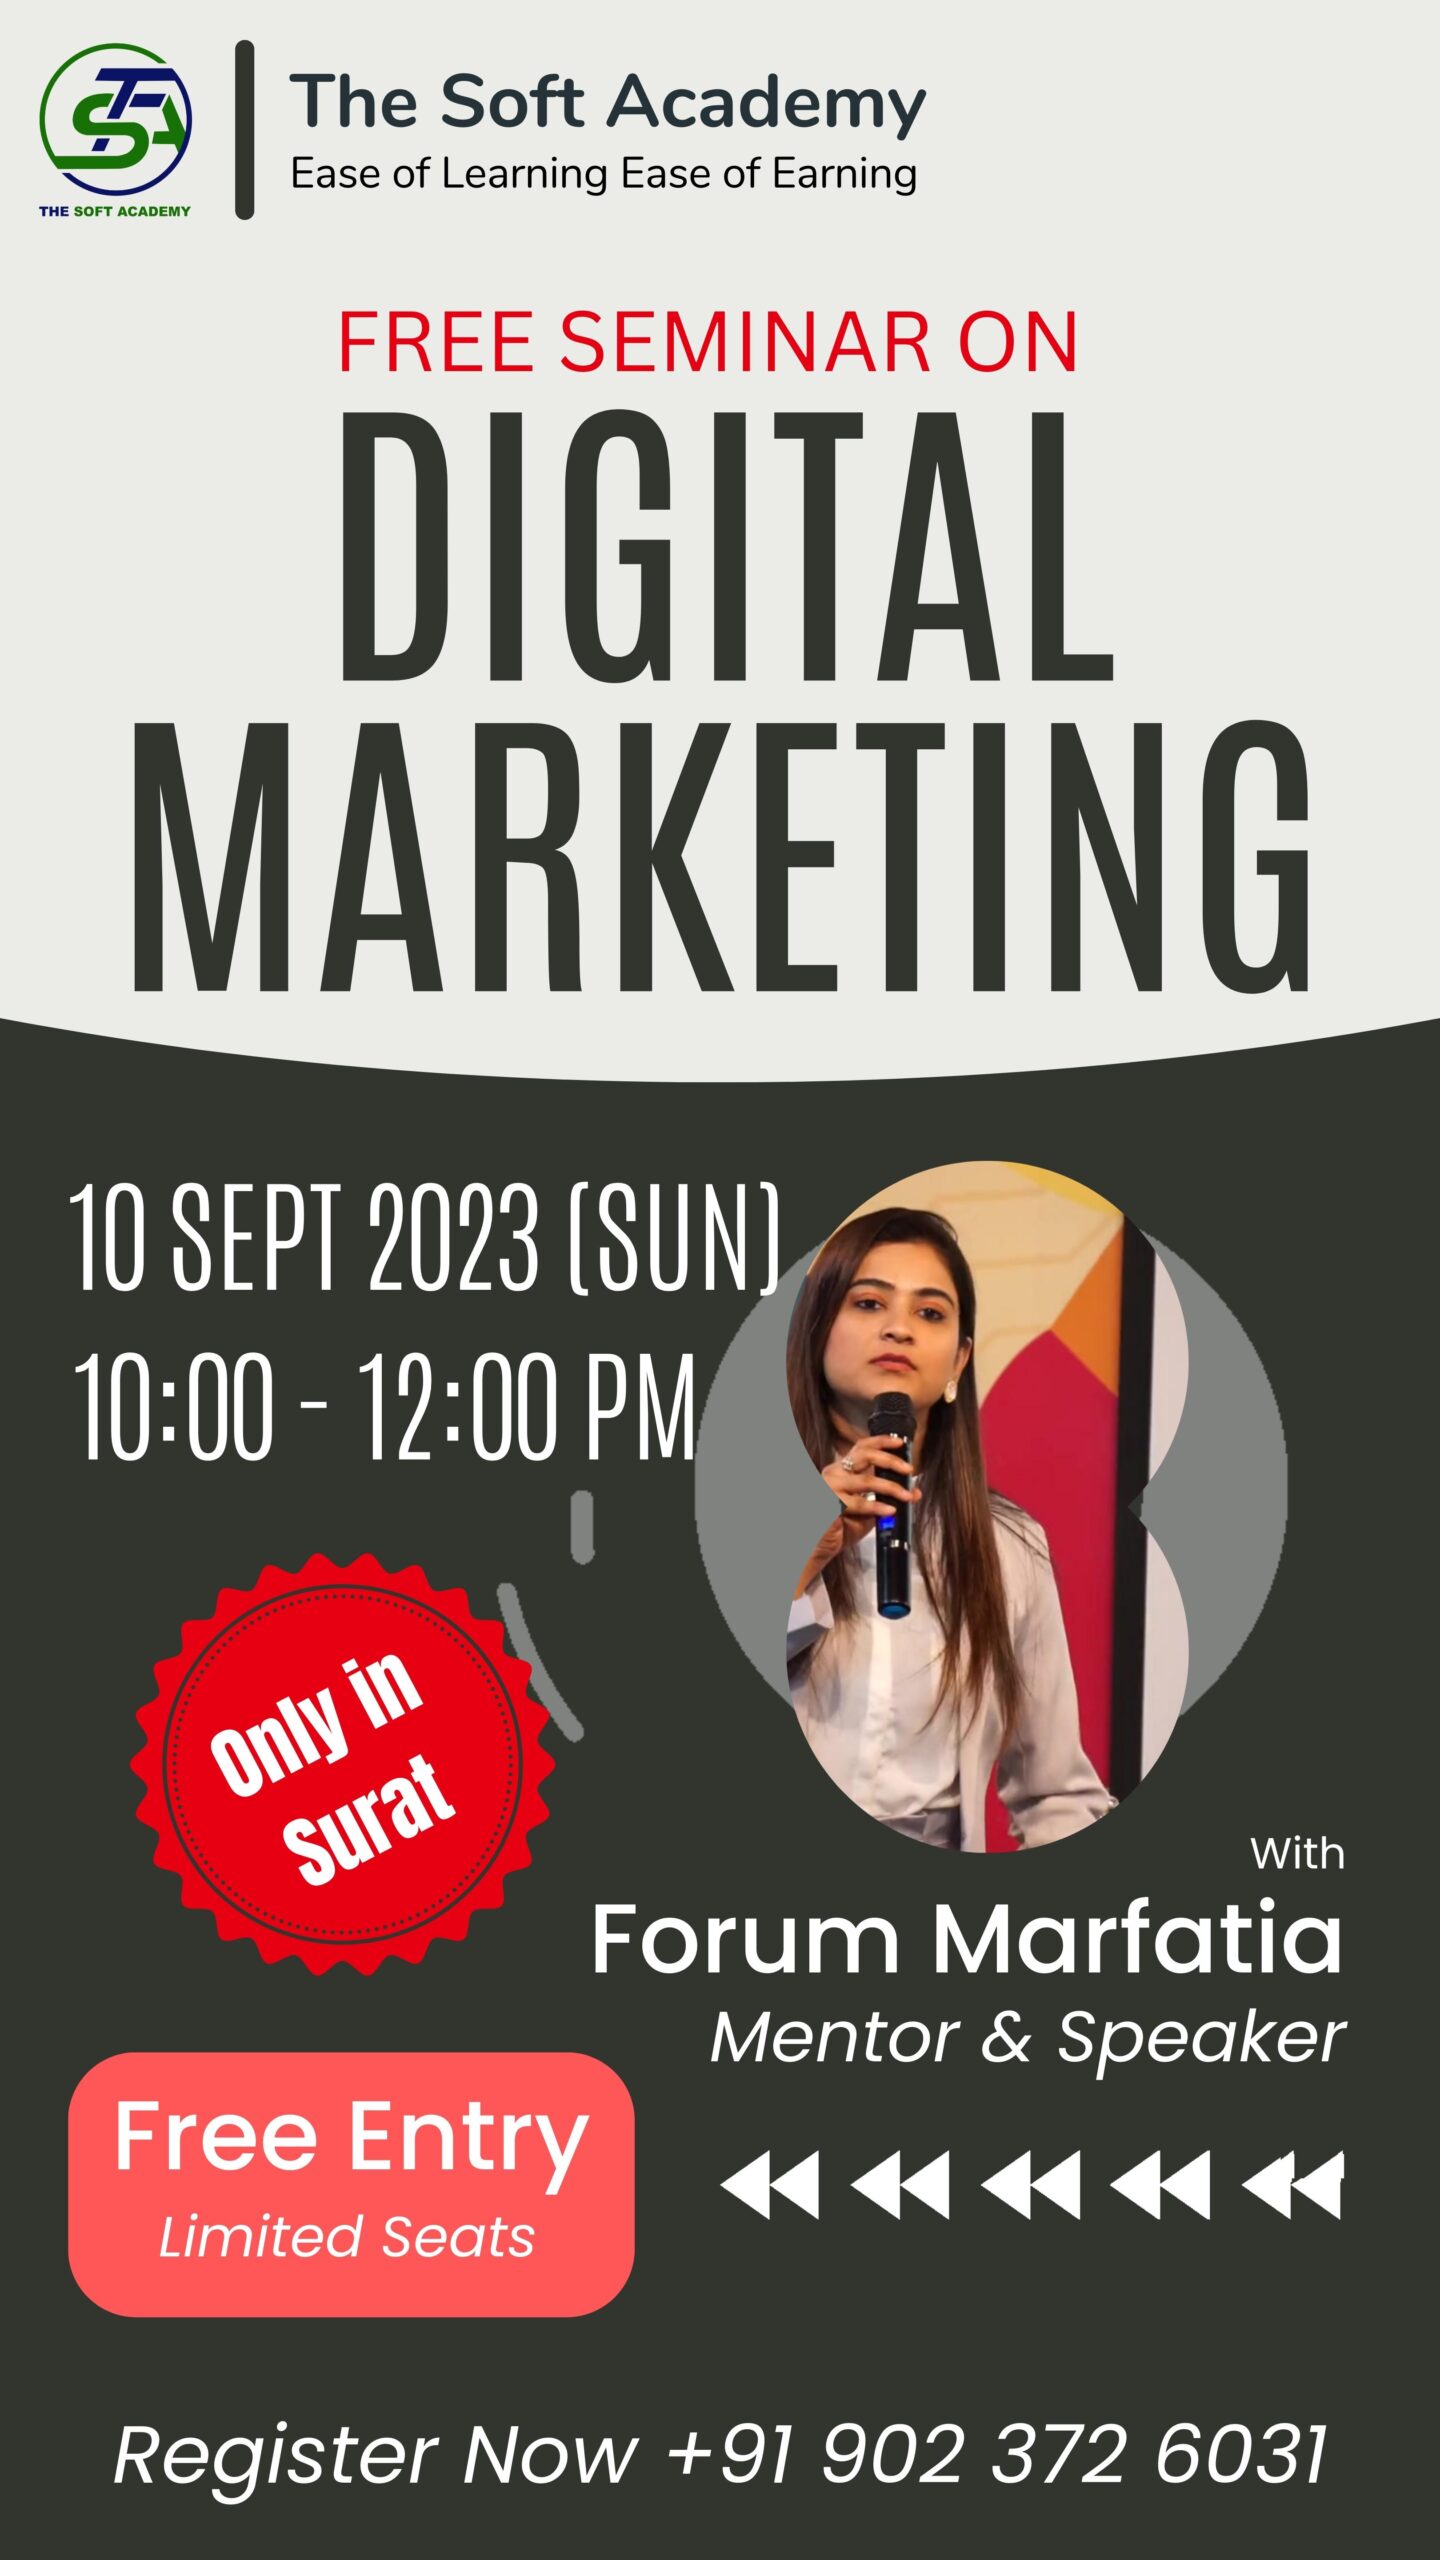 Digital Marketing Free Seminar in surat